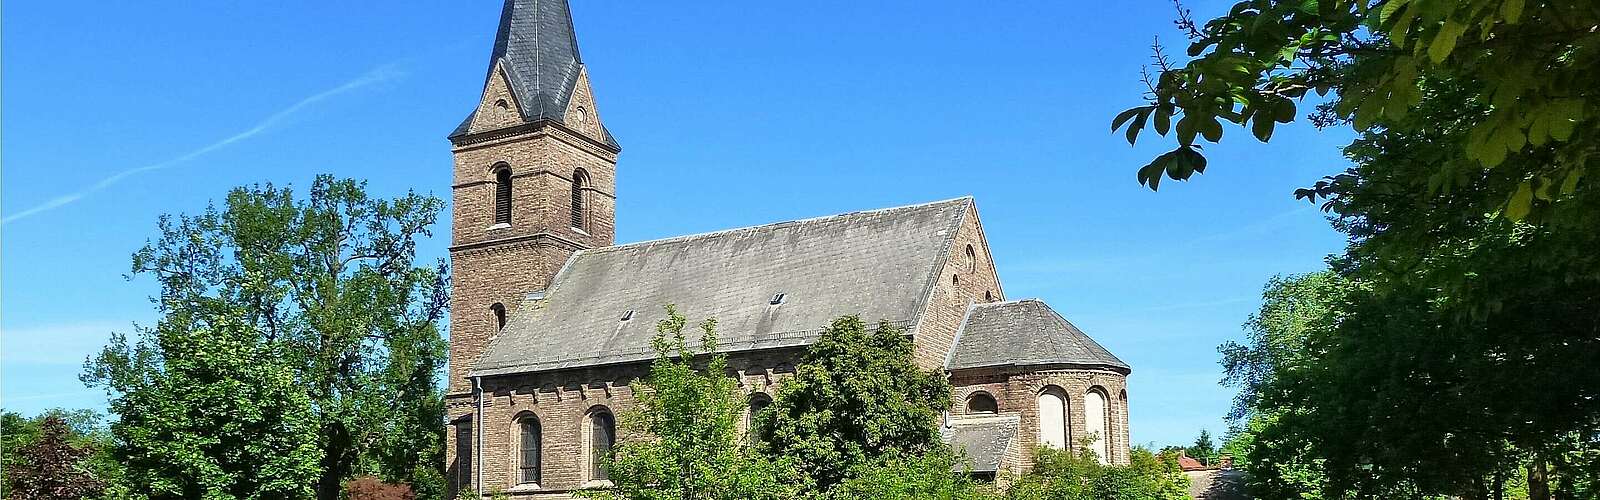 Kirche in Prieros,
        
    

        Foto: Tourismusverband Dahme-Seenland e.V./Juliane Frank